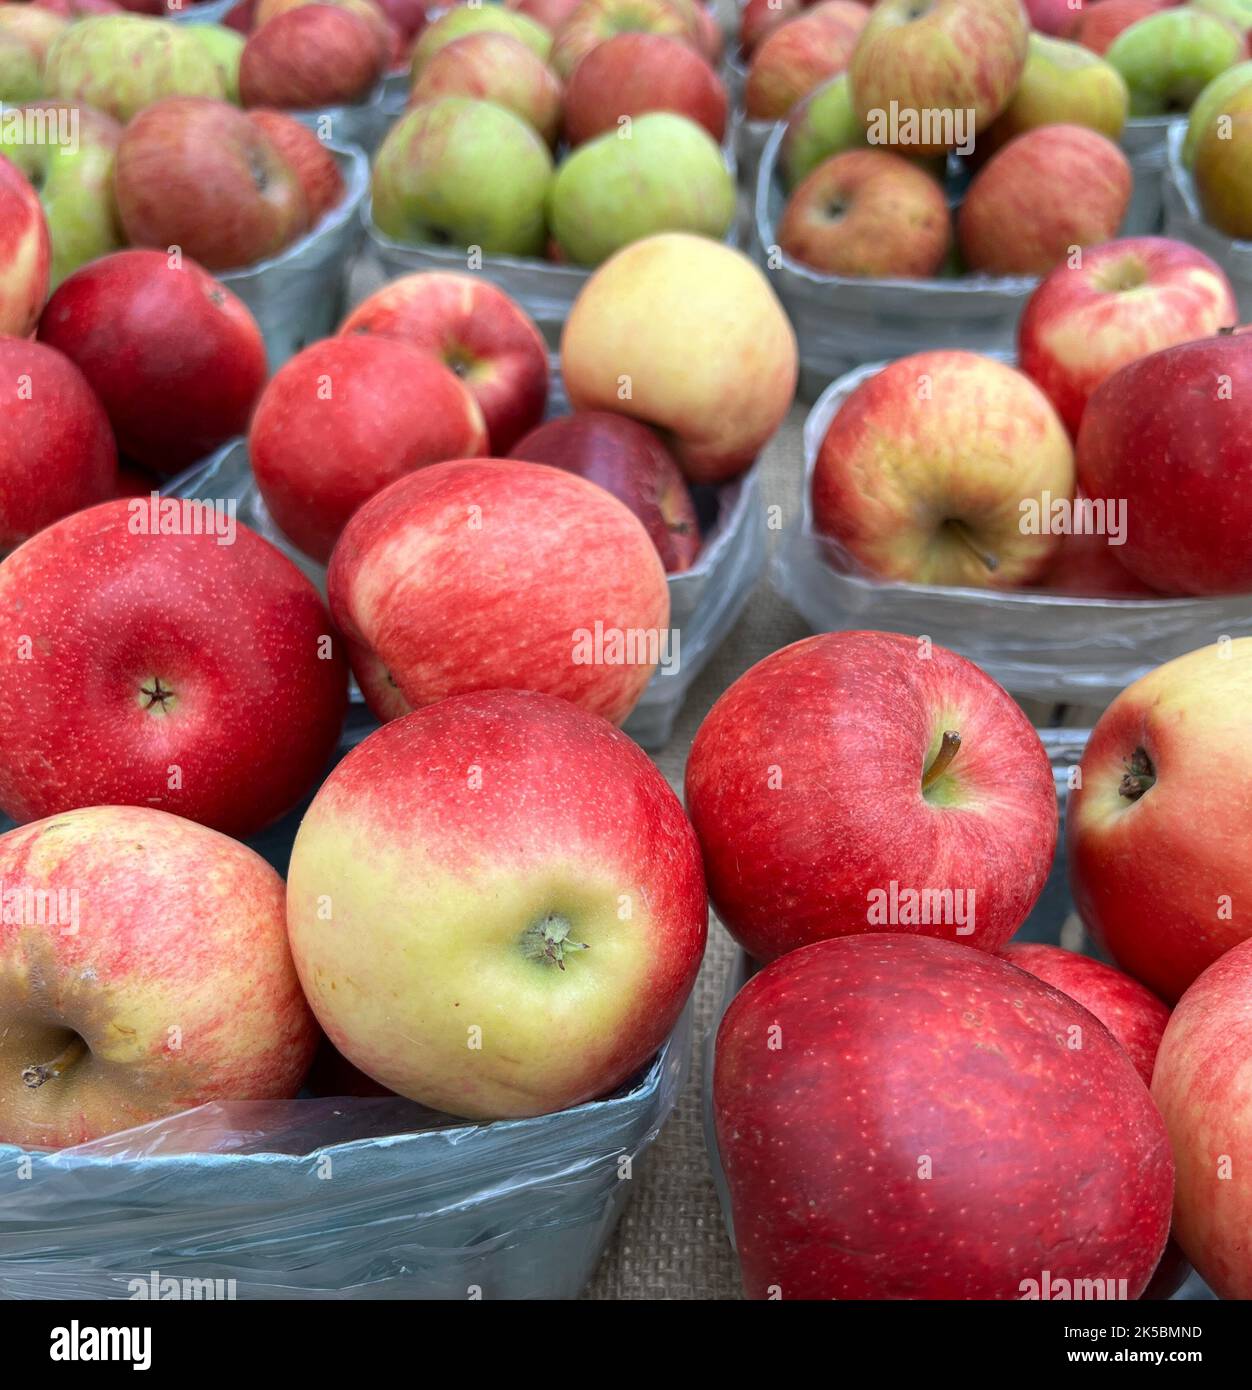 https://c8.alamy.com/comp/2K5BMND/baskets-of-freshly-harvested-apples-at-a-roadside-stand-in-new-york-2K5BMND.jpg